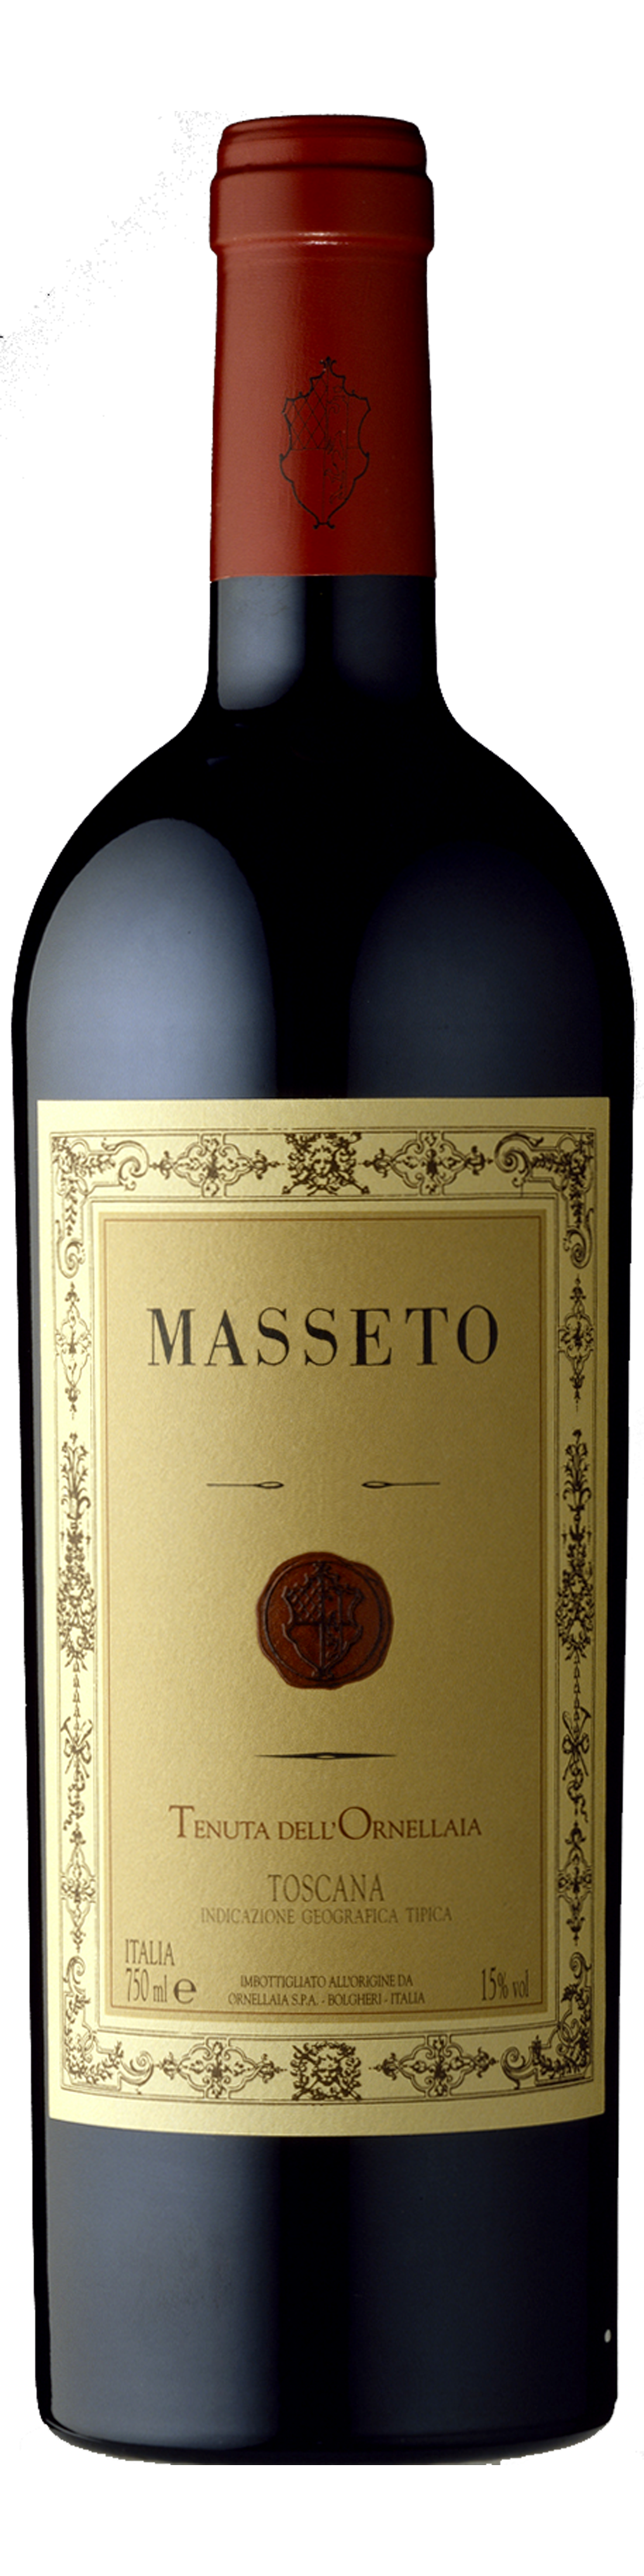 Bottle shot of 2004 Masseto